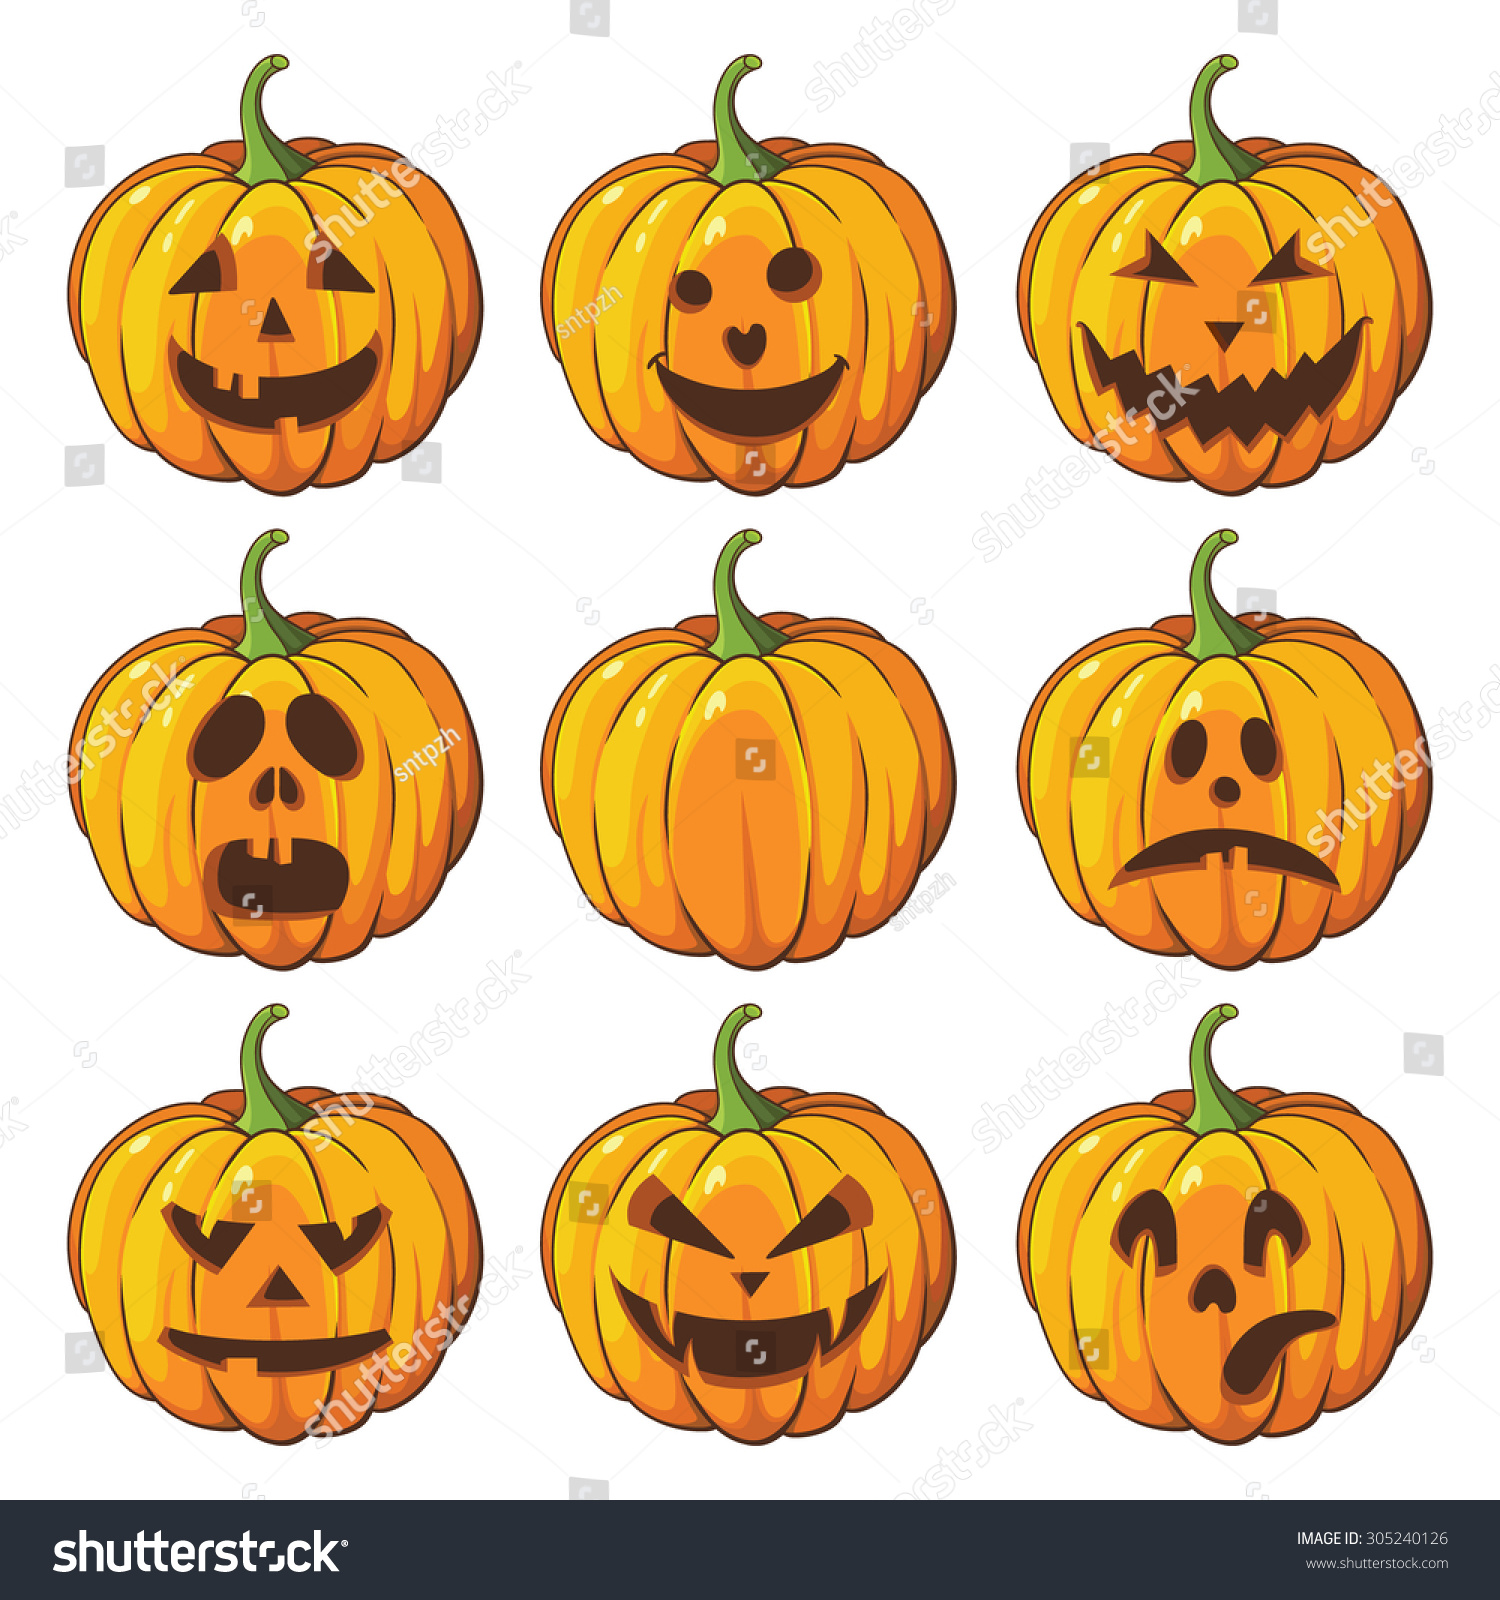 Halloween Set With Pumpkins Stock Vector Illustration 305240126 ...